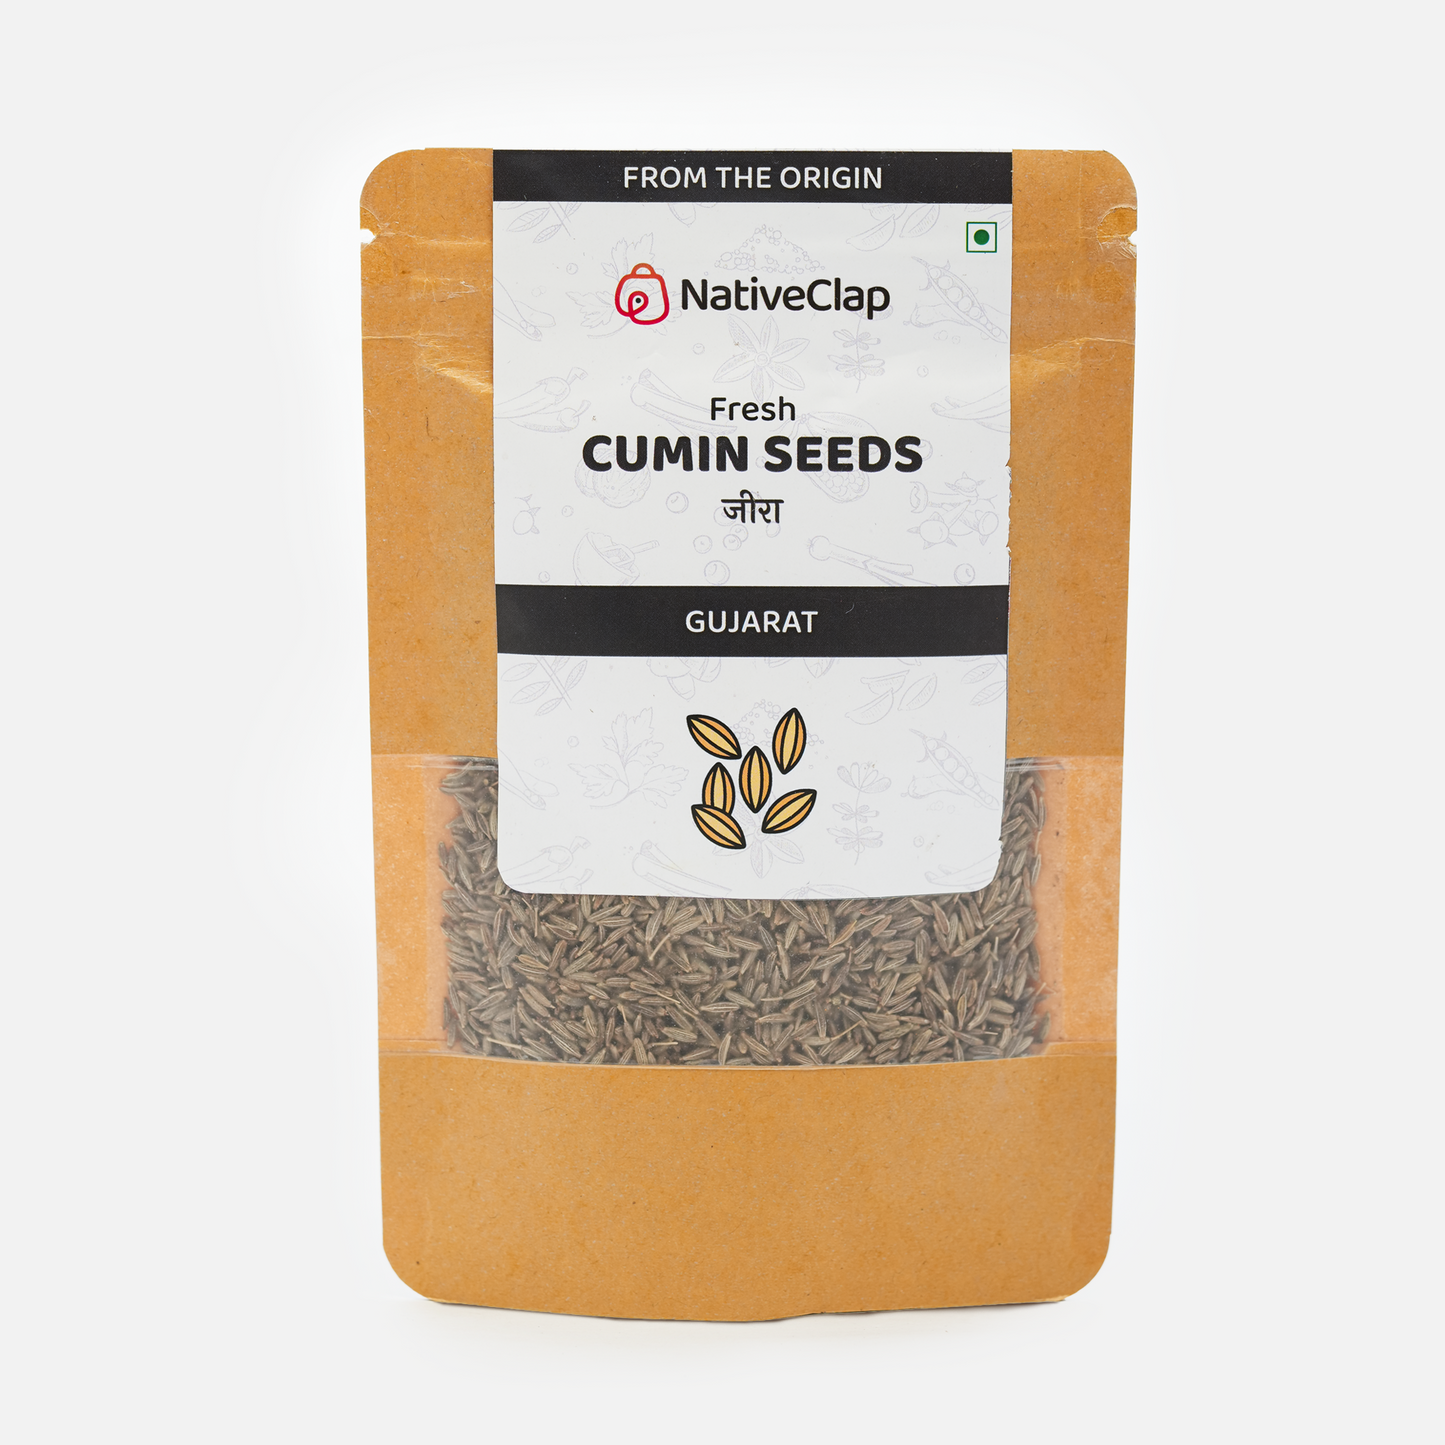 Cumin Seeds